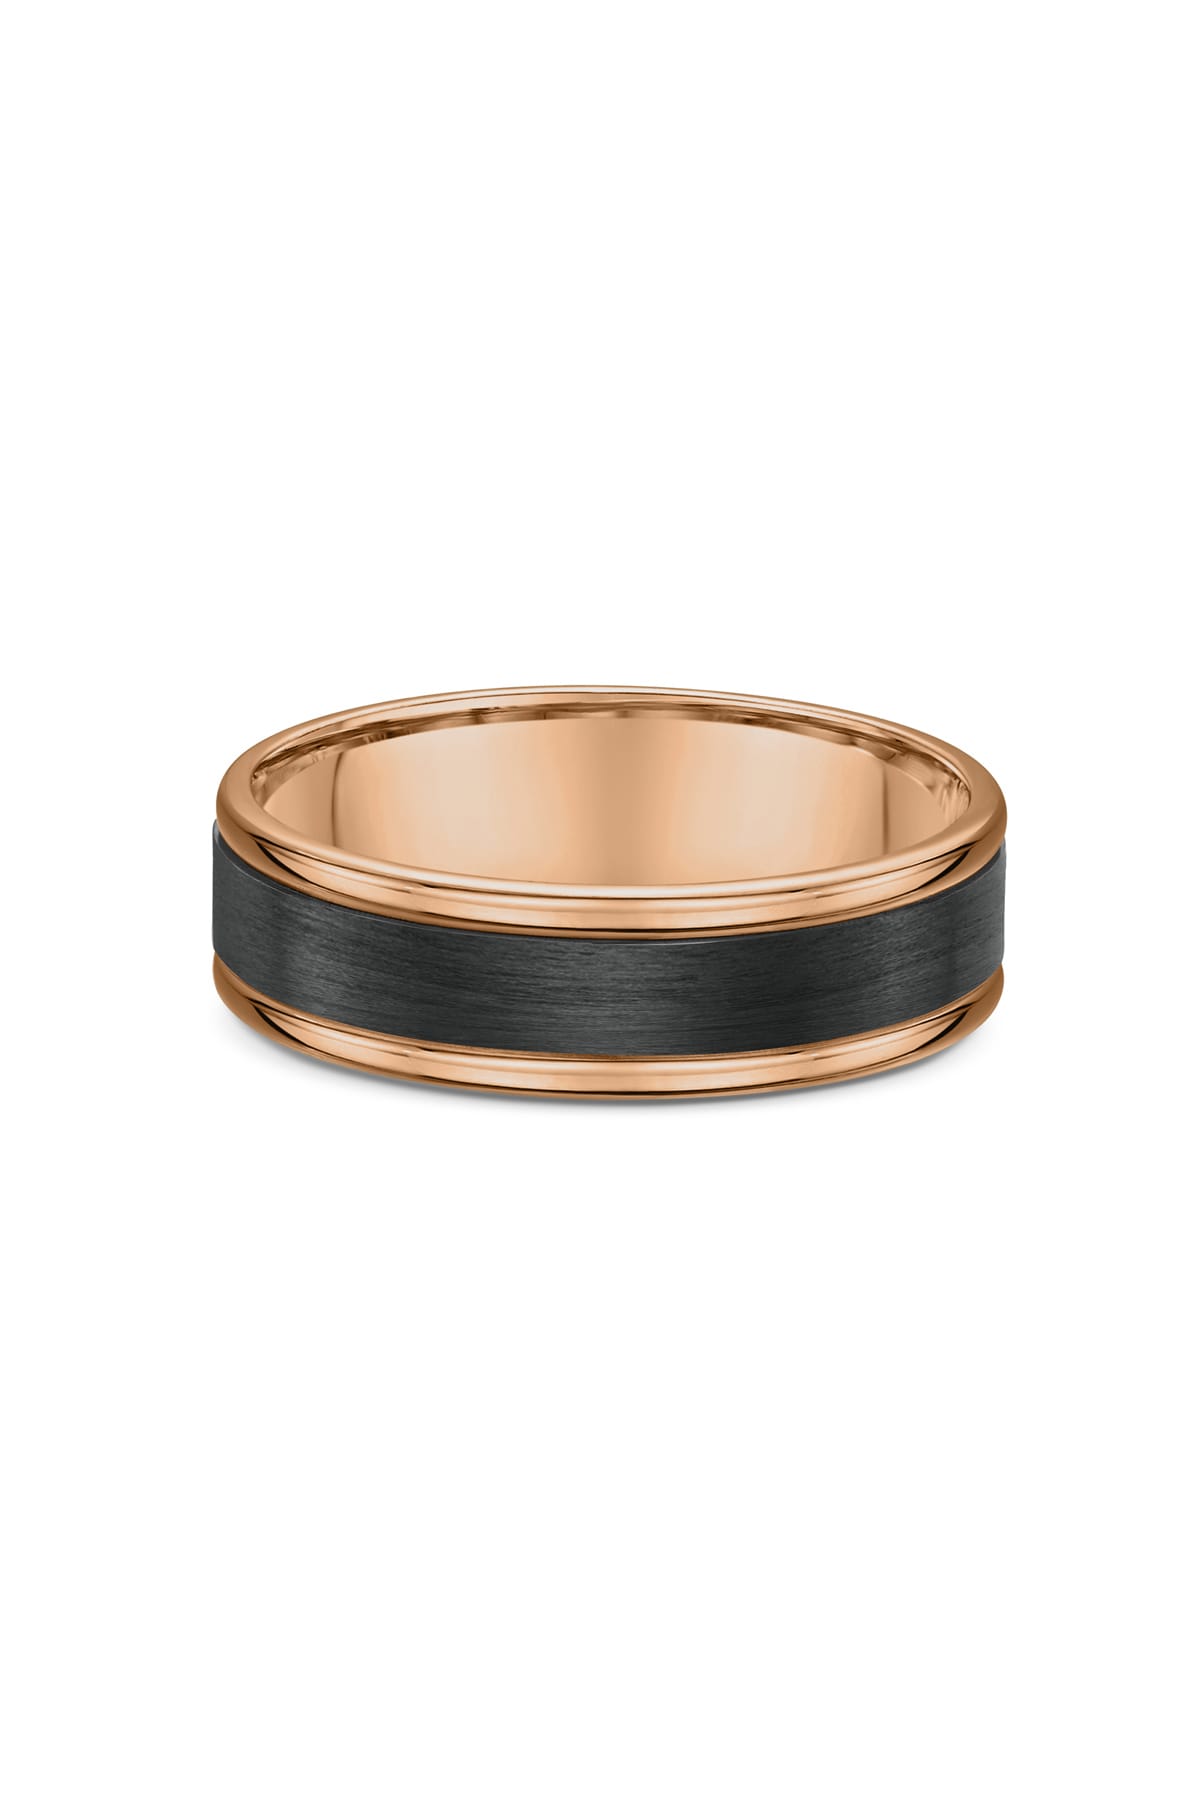 Men's Rose Gold Wedding Ring 589B00 from LeGassick Diamonds and Jewellery, Gold Coast Australia